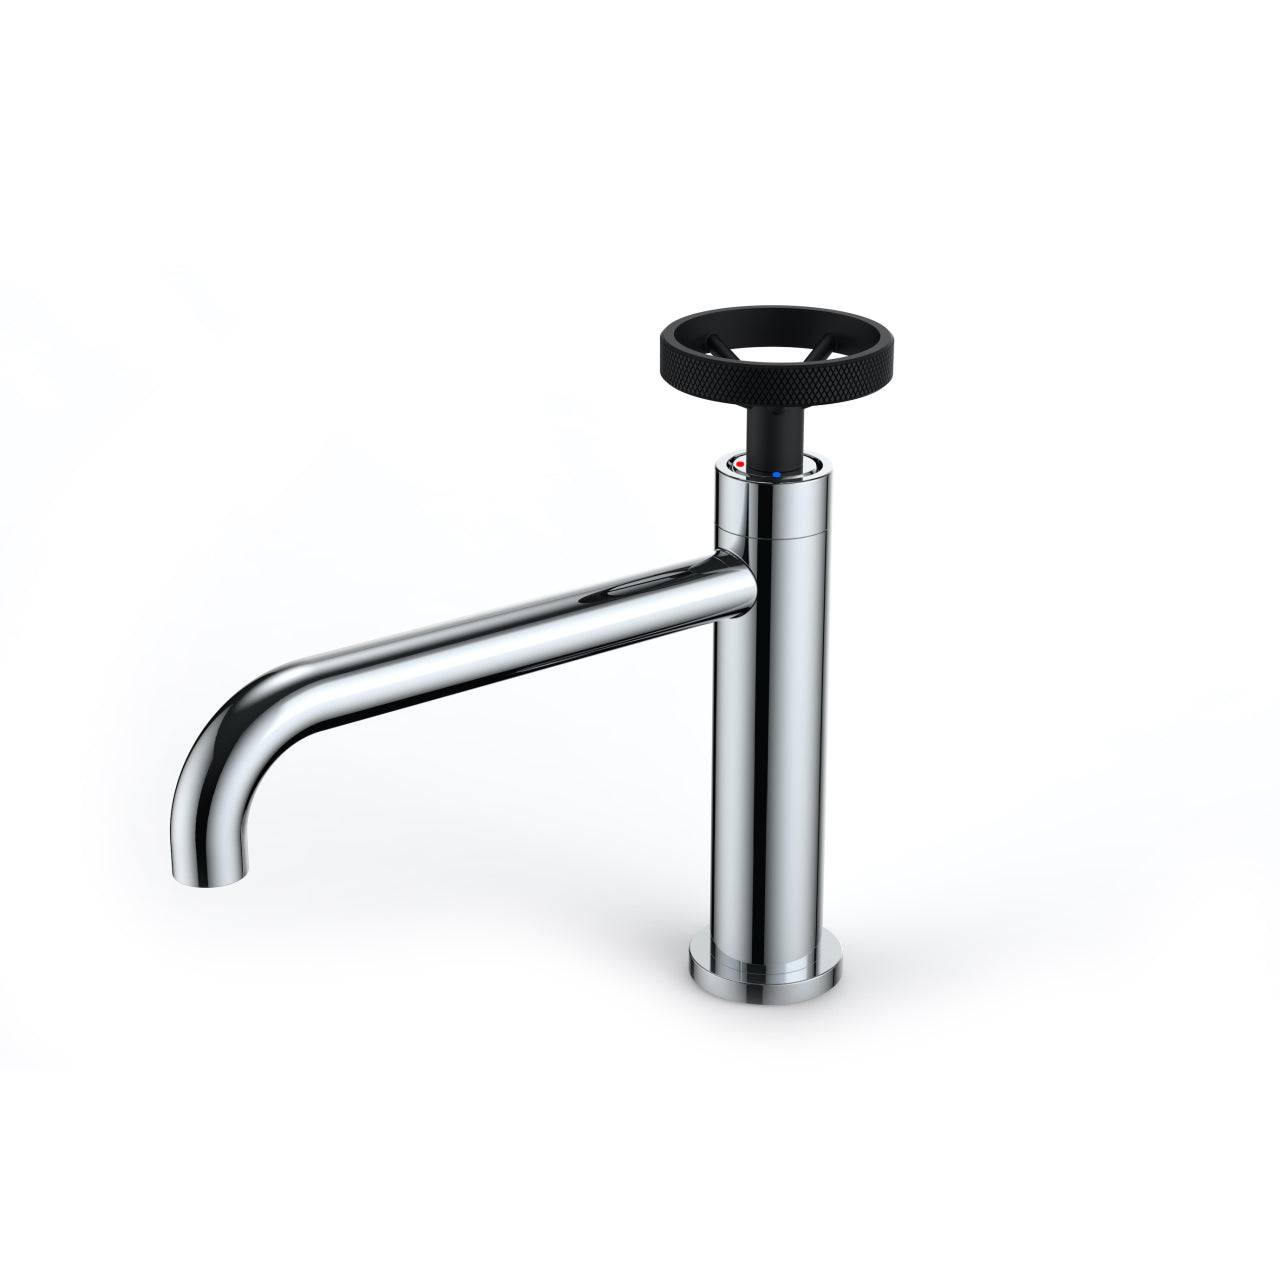 Kube Bath Aqua Loft Single Lever Bathroom Vanity Faucet – Chrome